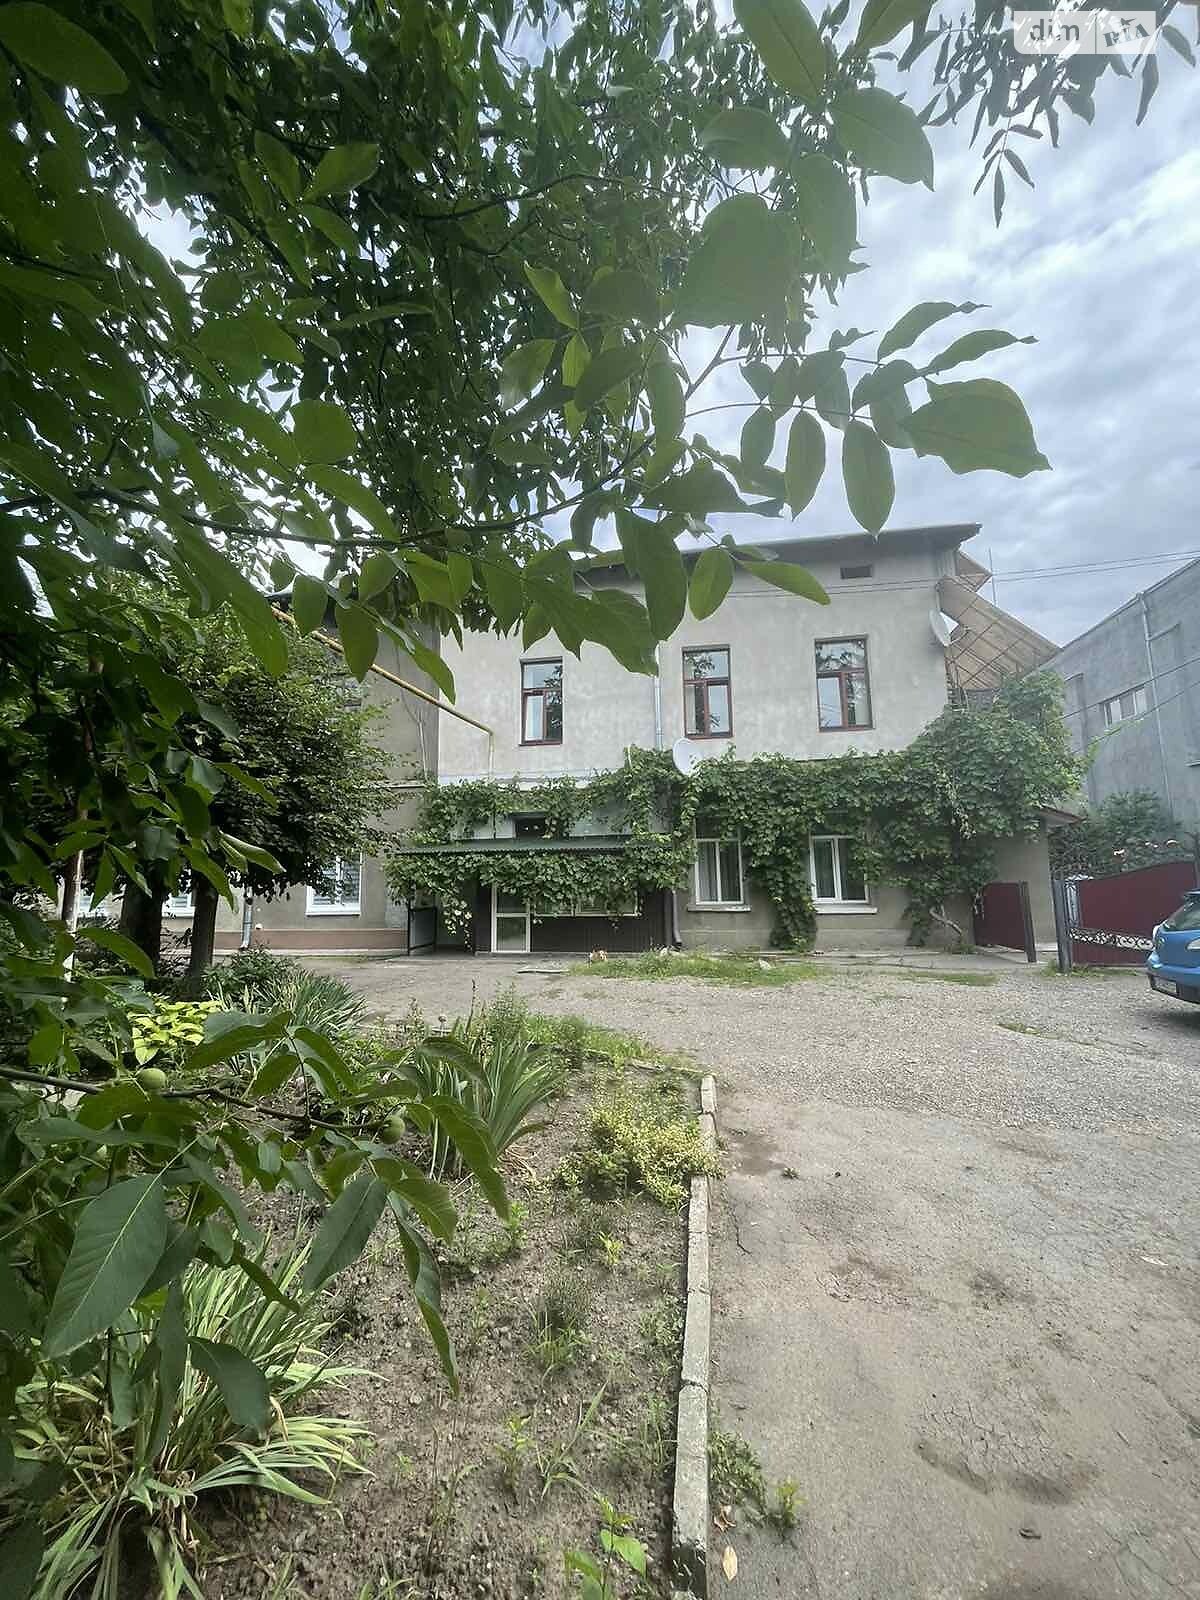 Продажа трехкомнатной квартиры в Черновцах, на ул. Хотинская 4В, район Хотинский фото 1